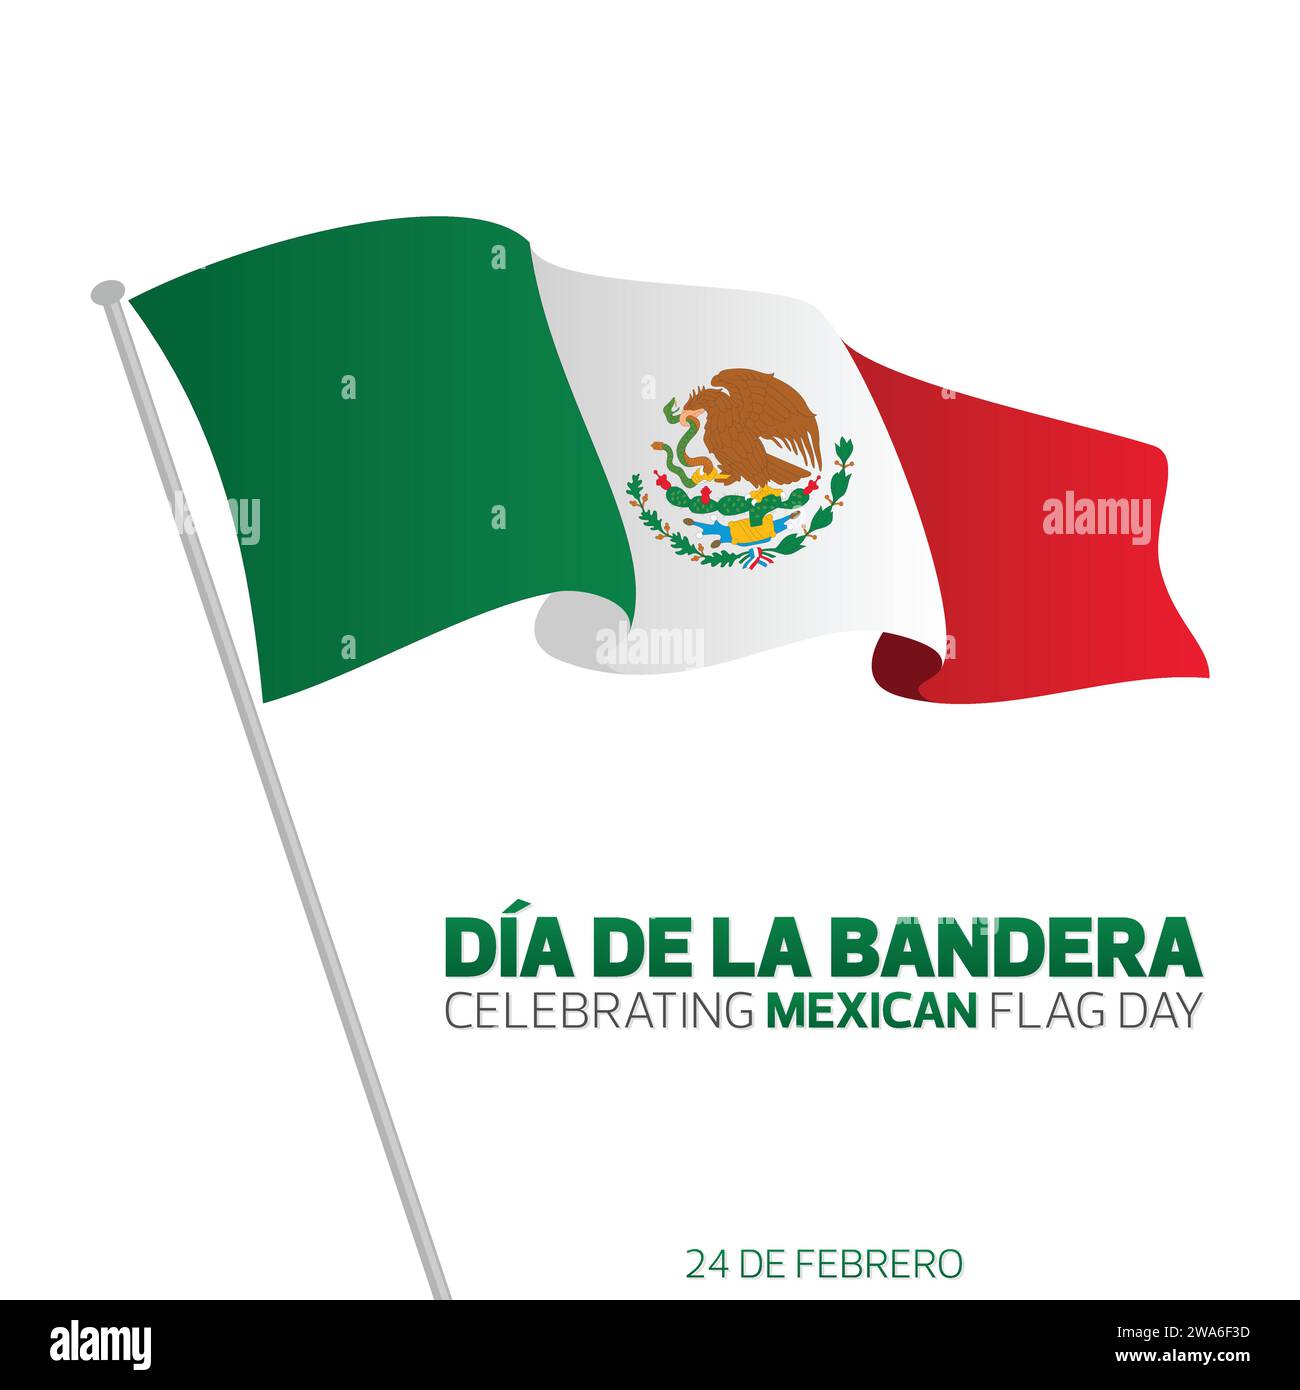 Dia de la Bandera Celebrating Mexican Flag Day template background